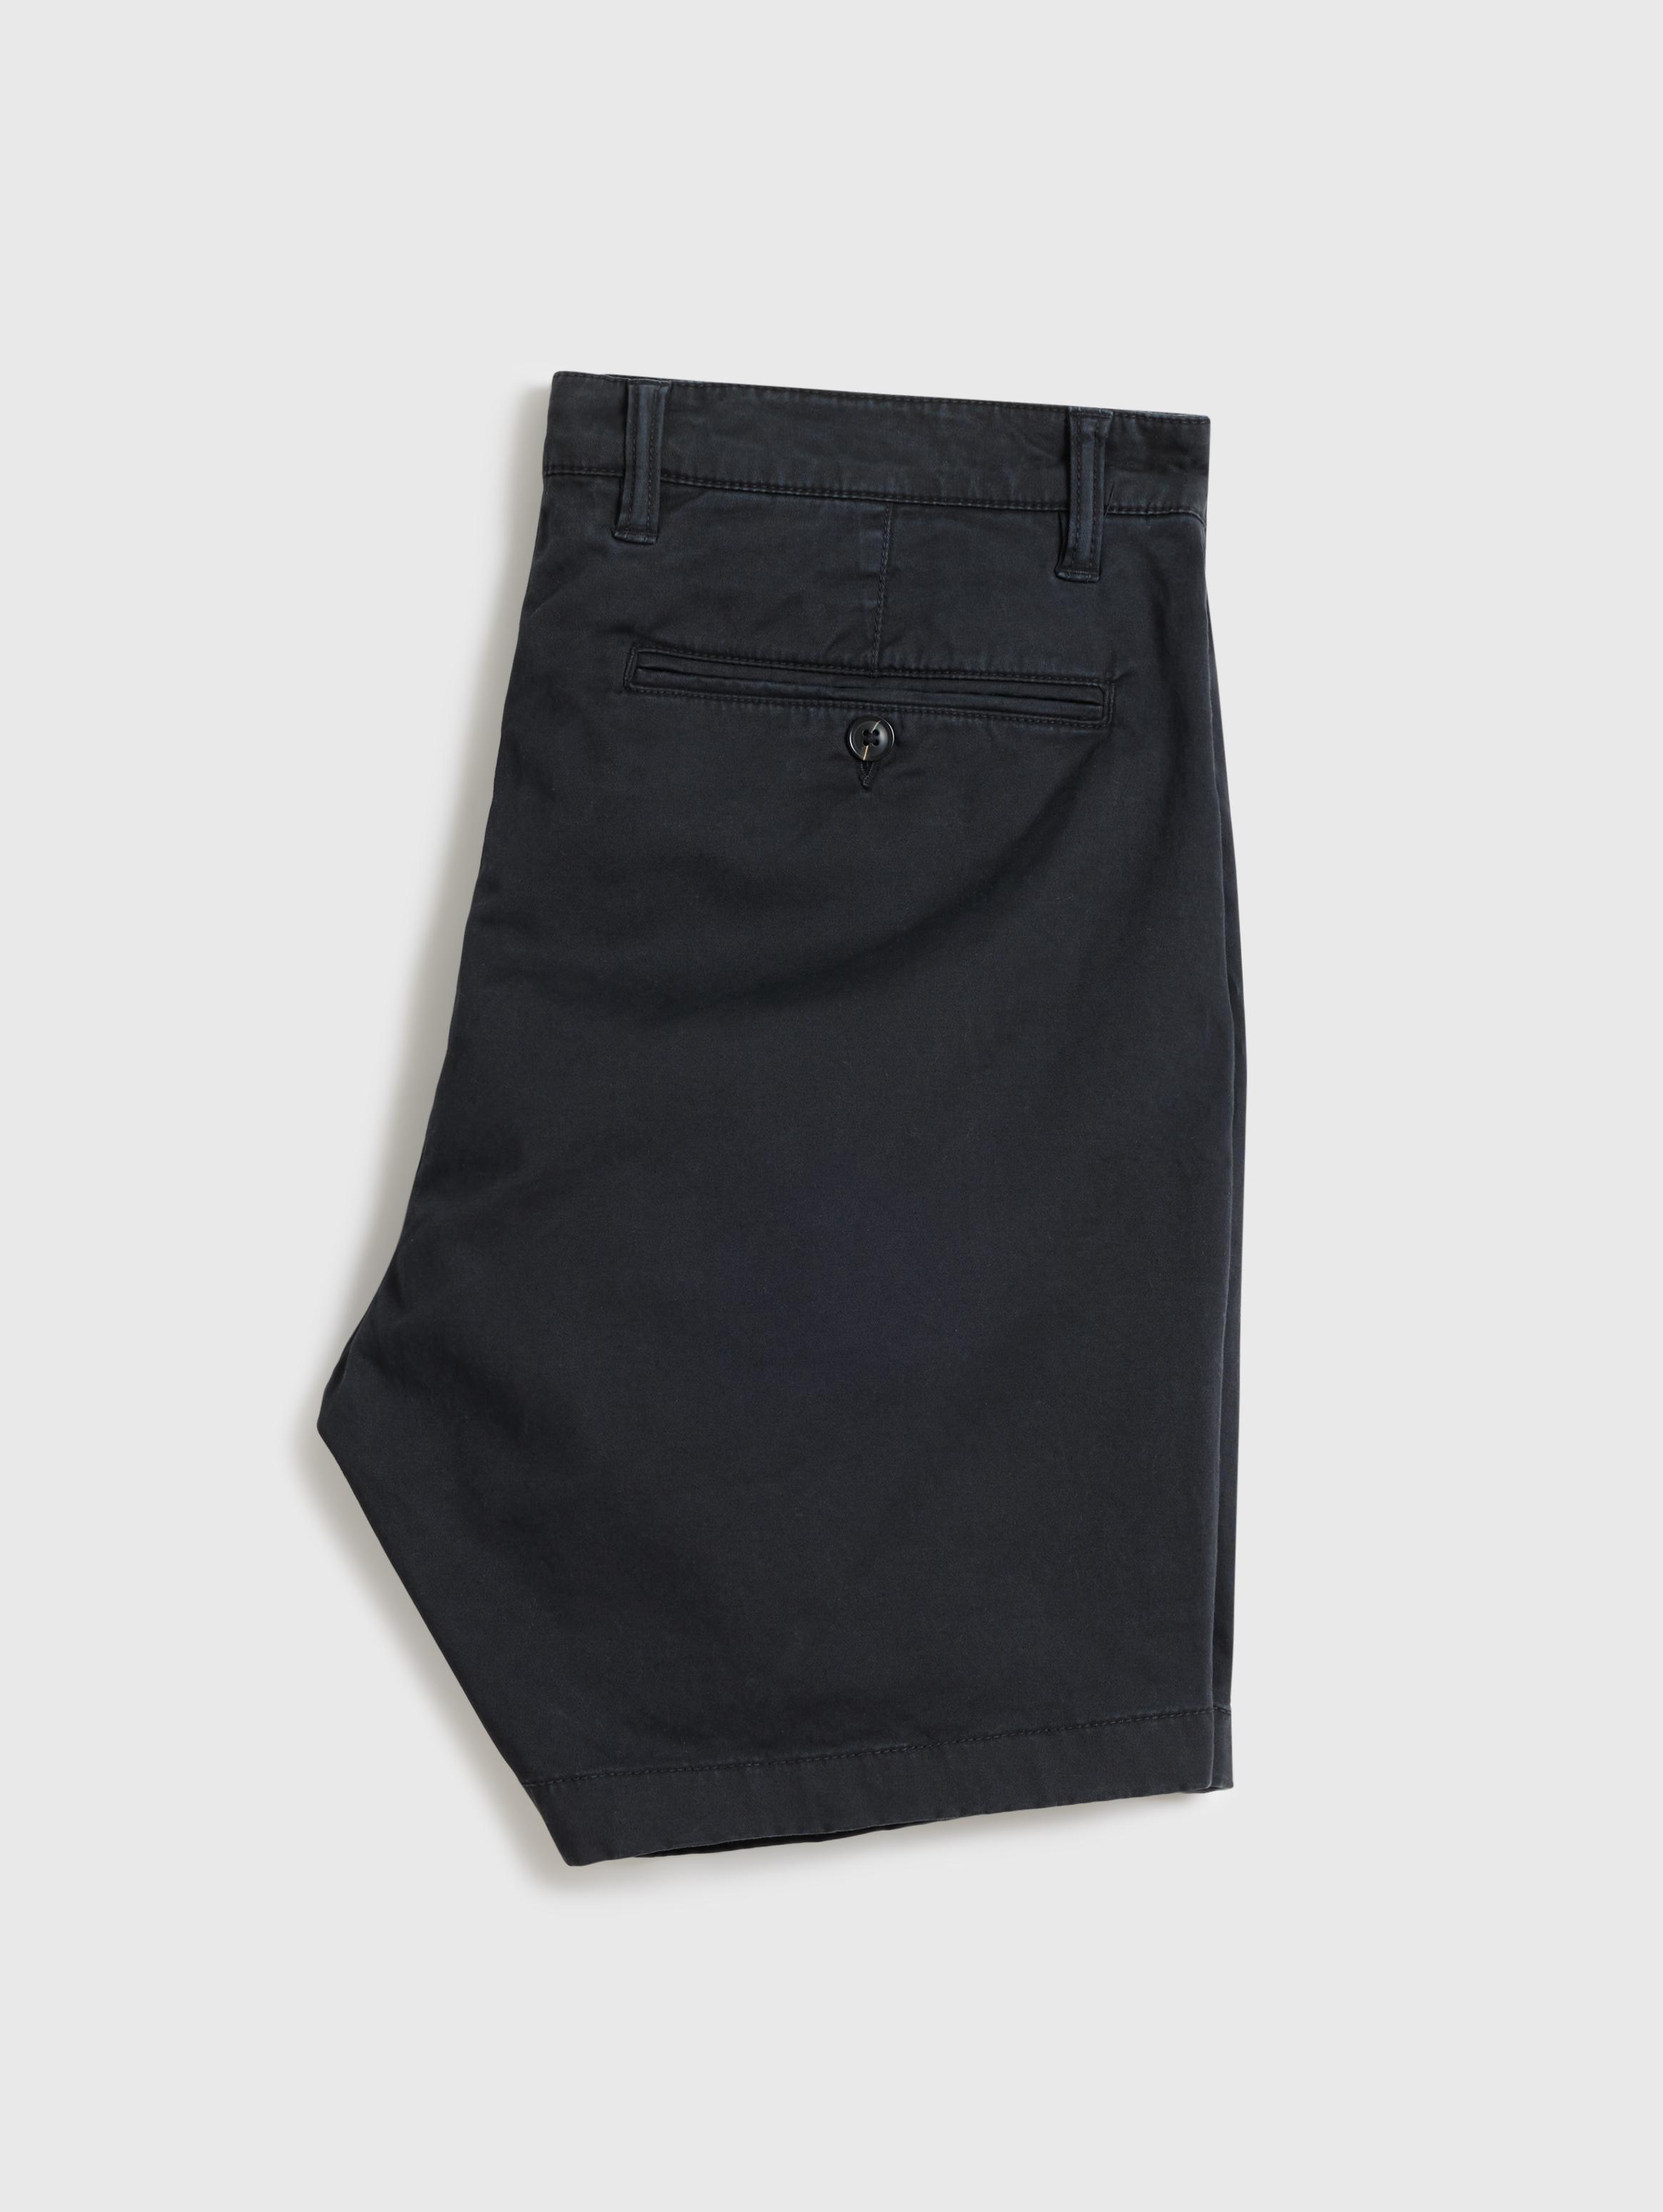 Louis Vuitton 2015 Flat Front Shorts - Shorts, Clothing - LOU760659